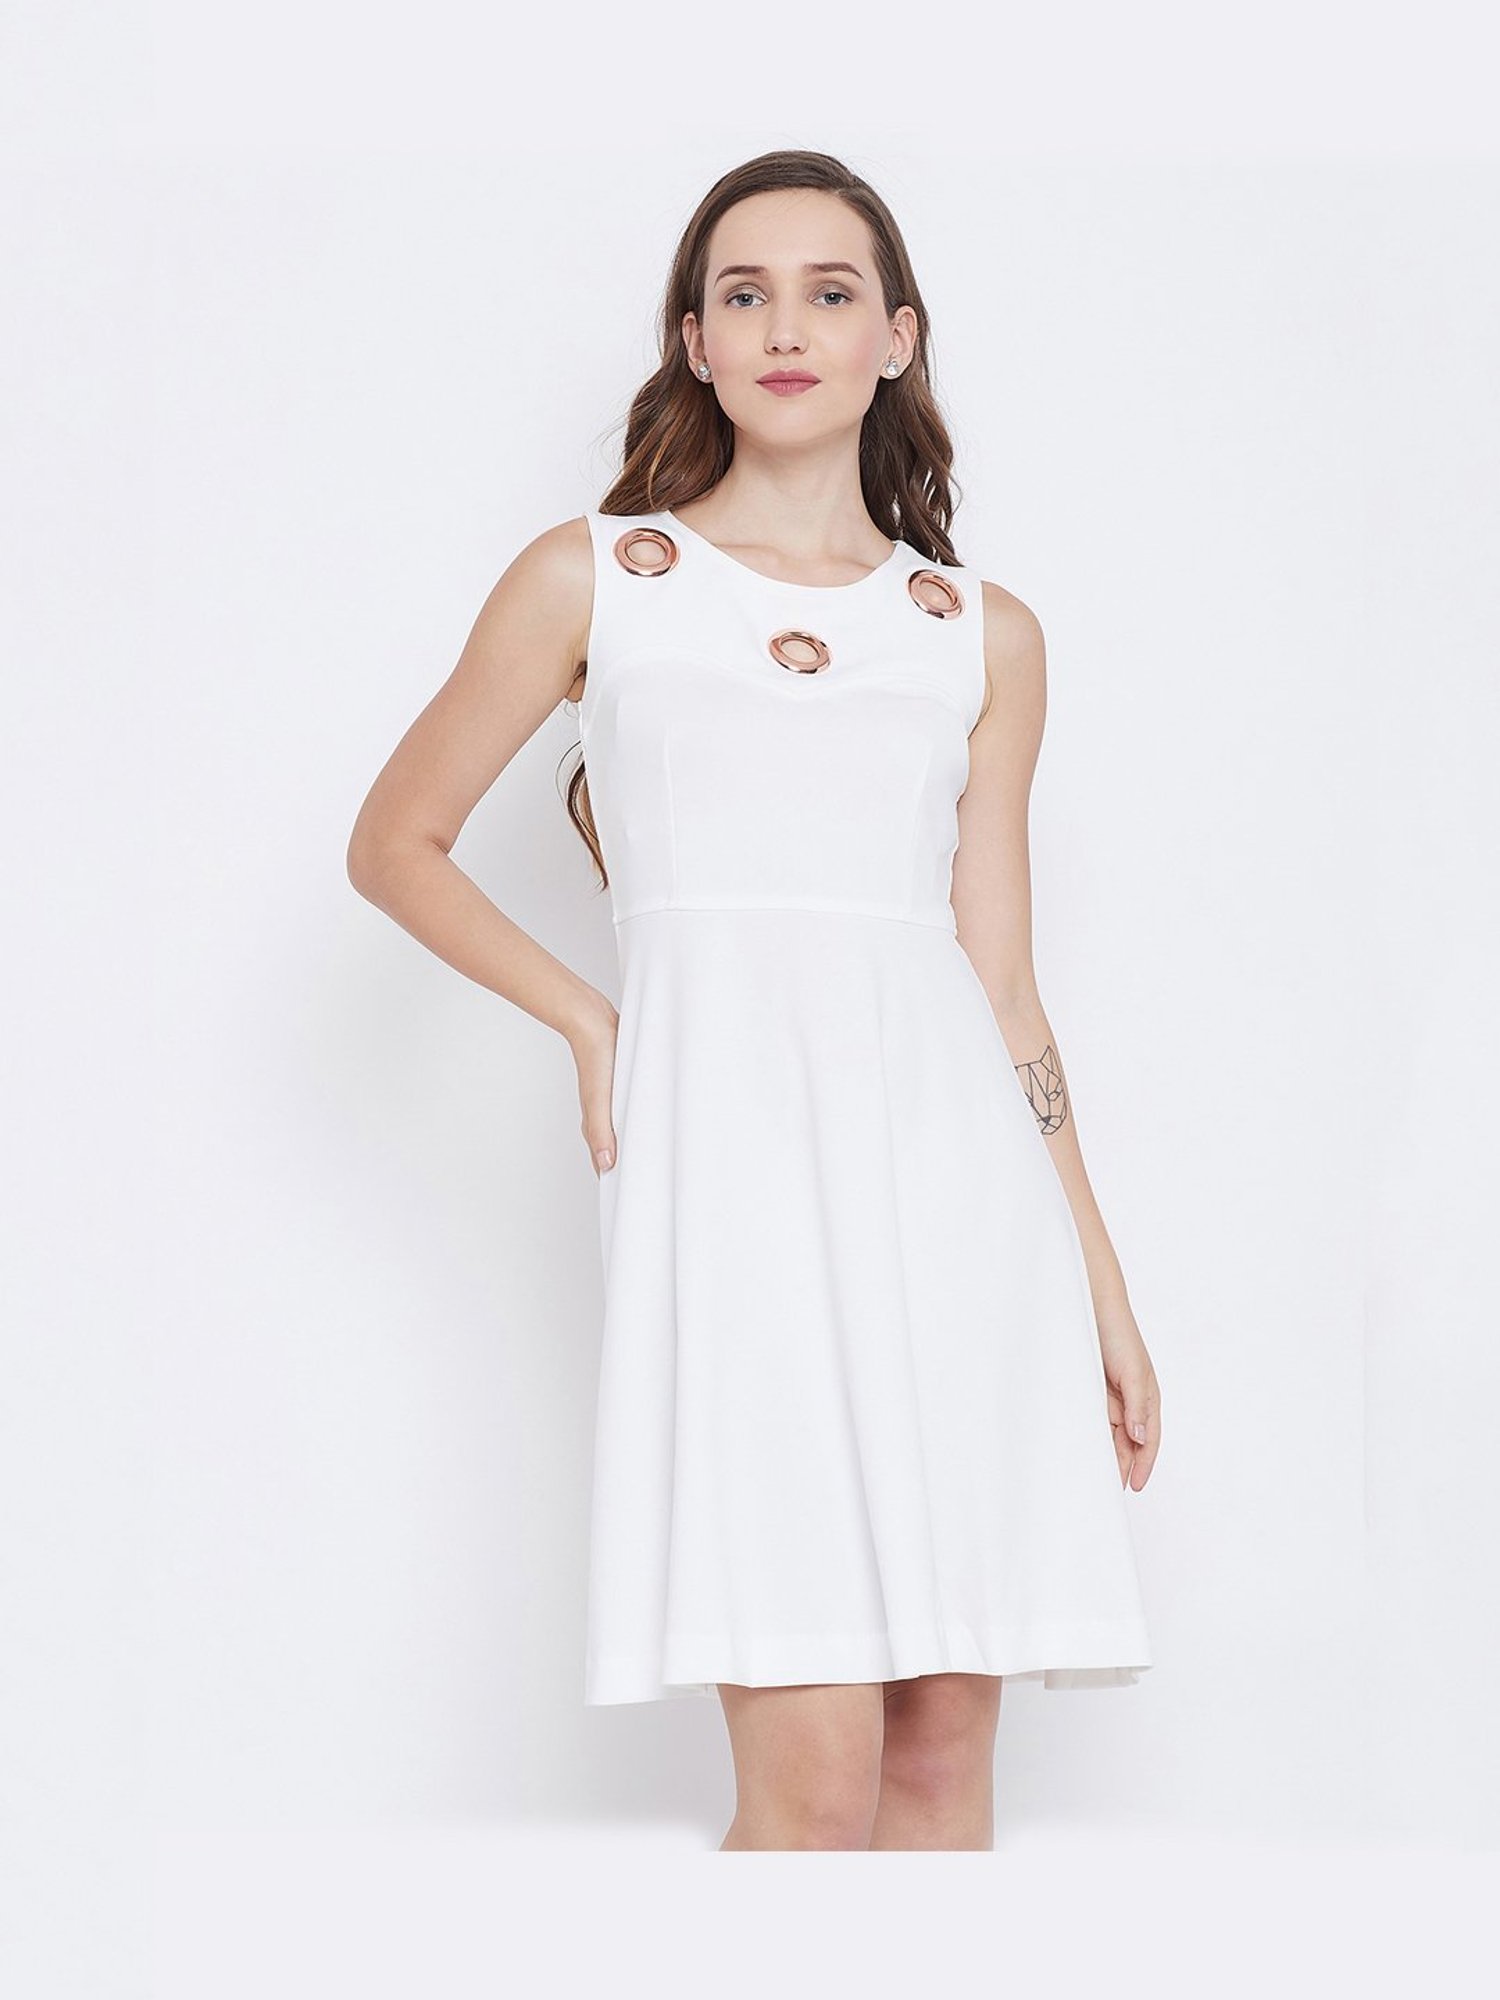 madame white dress